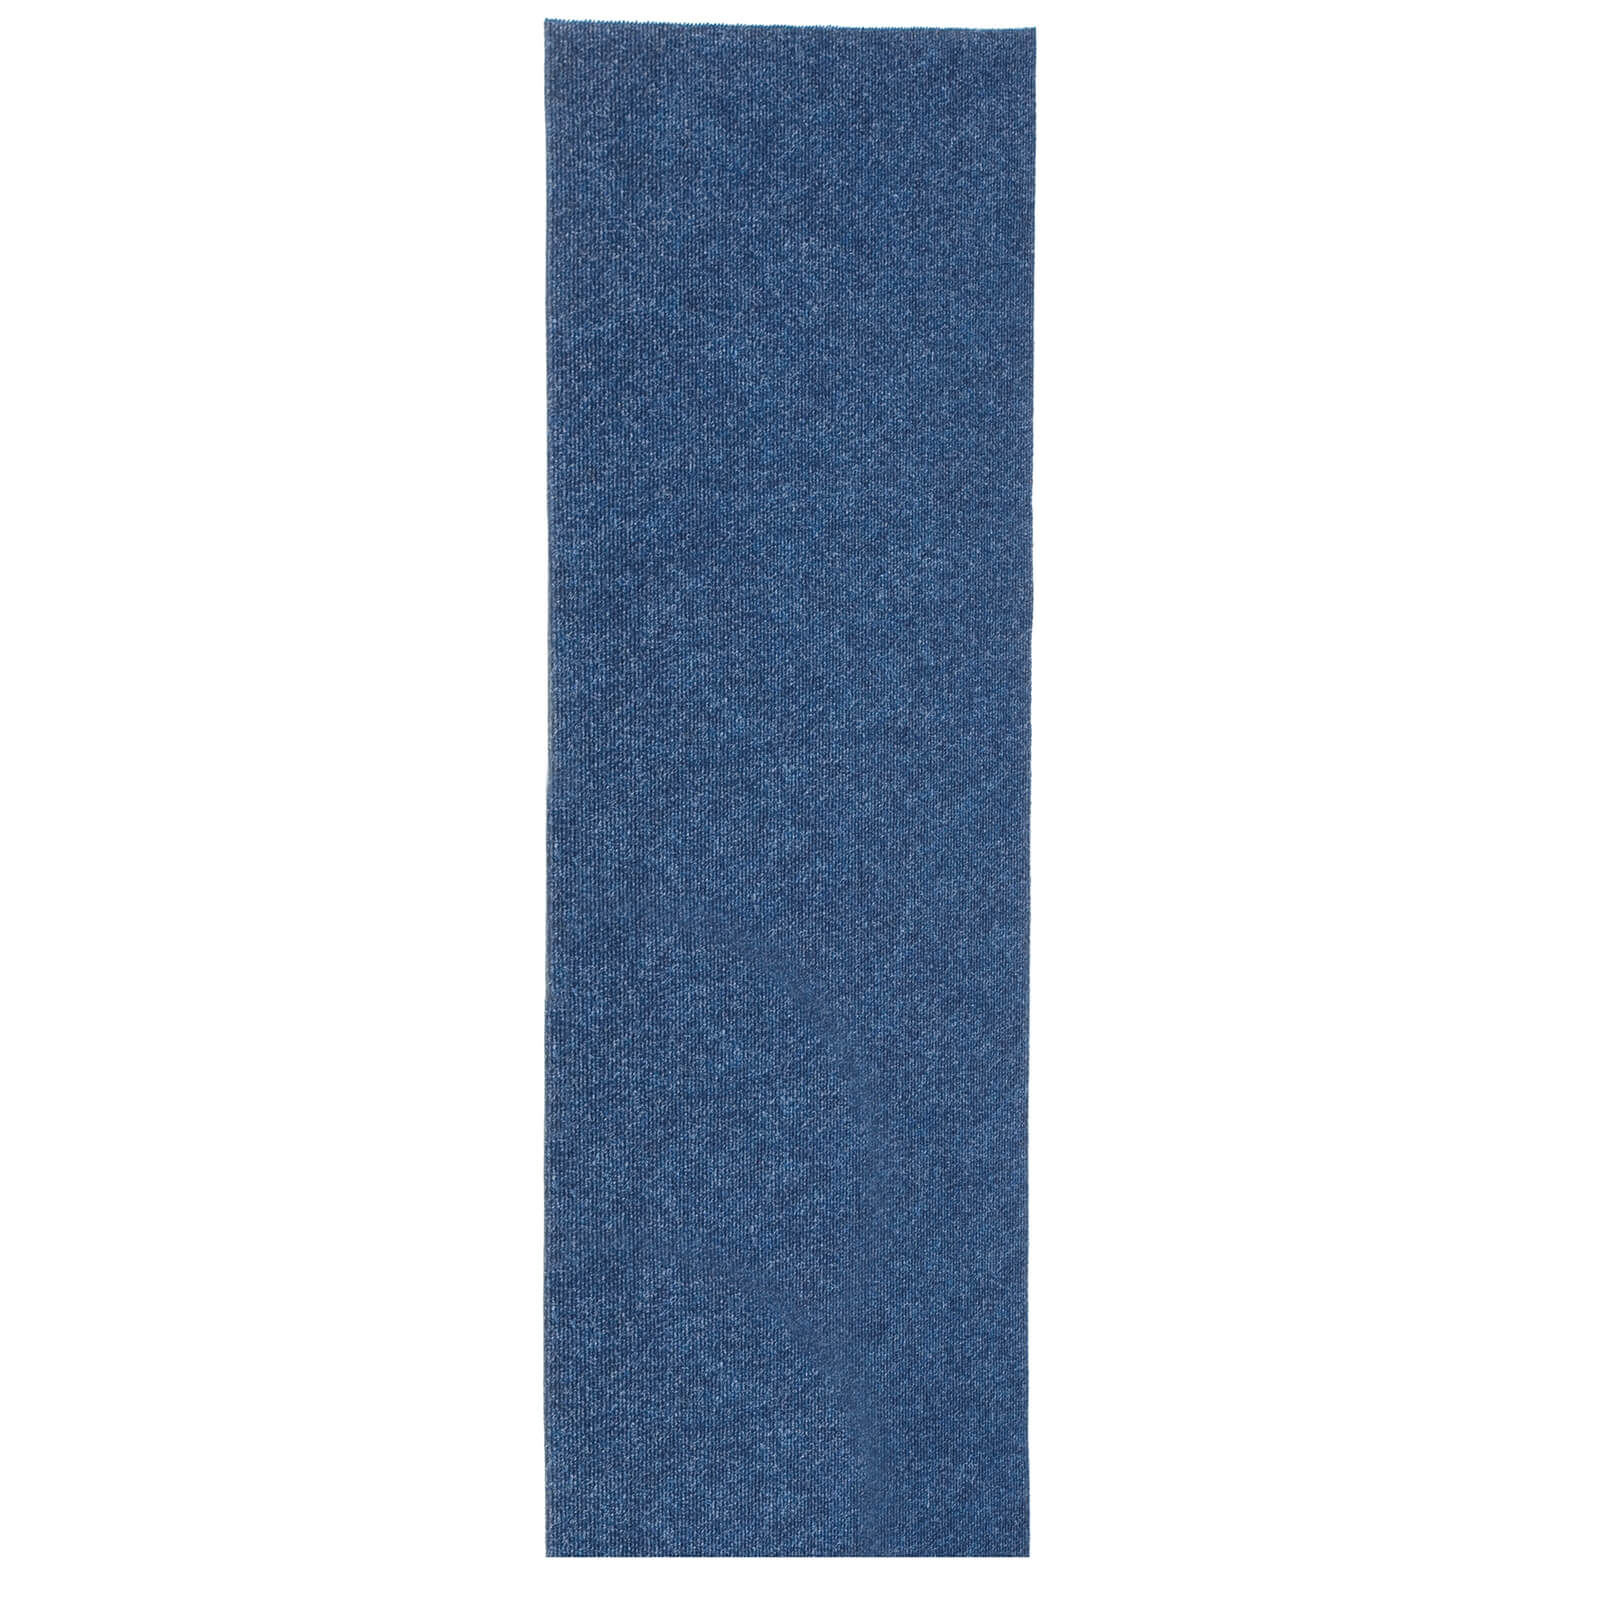 Ribbed Extra Long Runner - Blue - 66x300cm